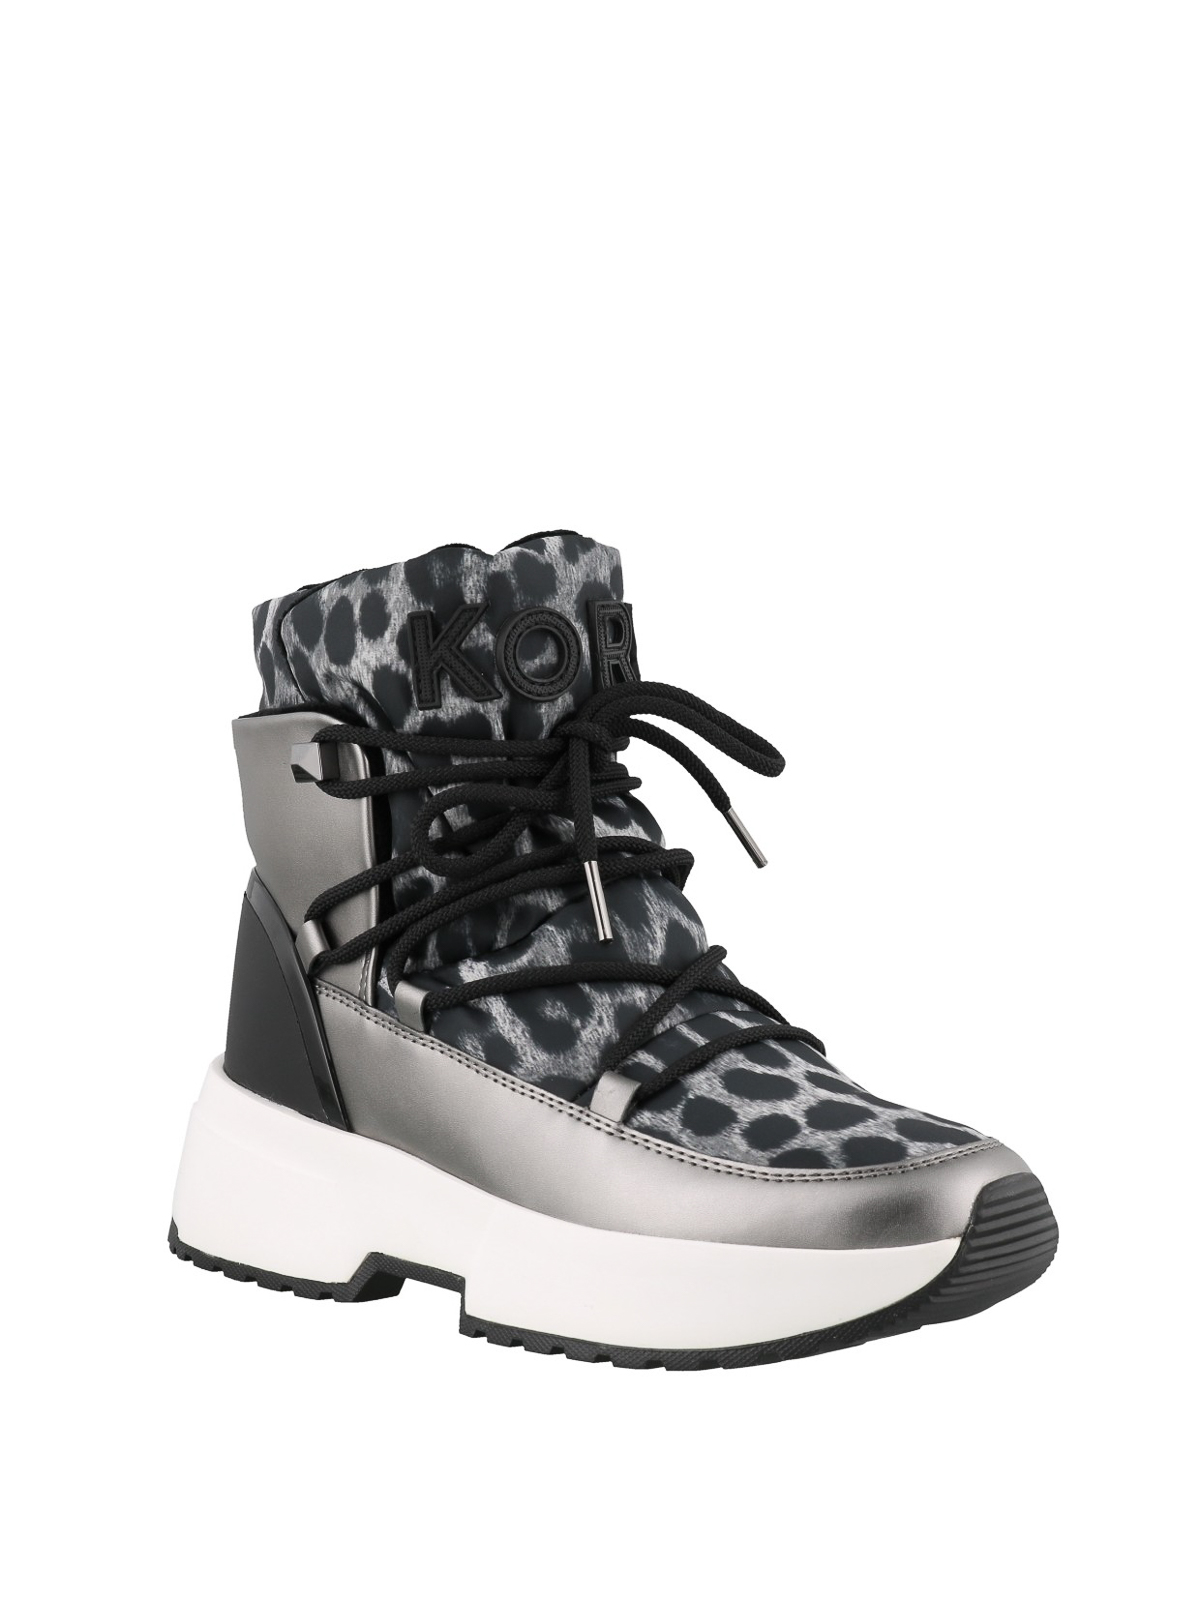 michael kors leopard print boots